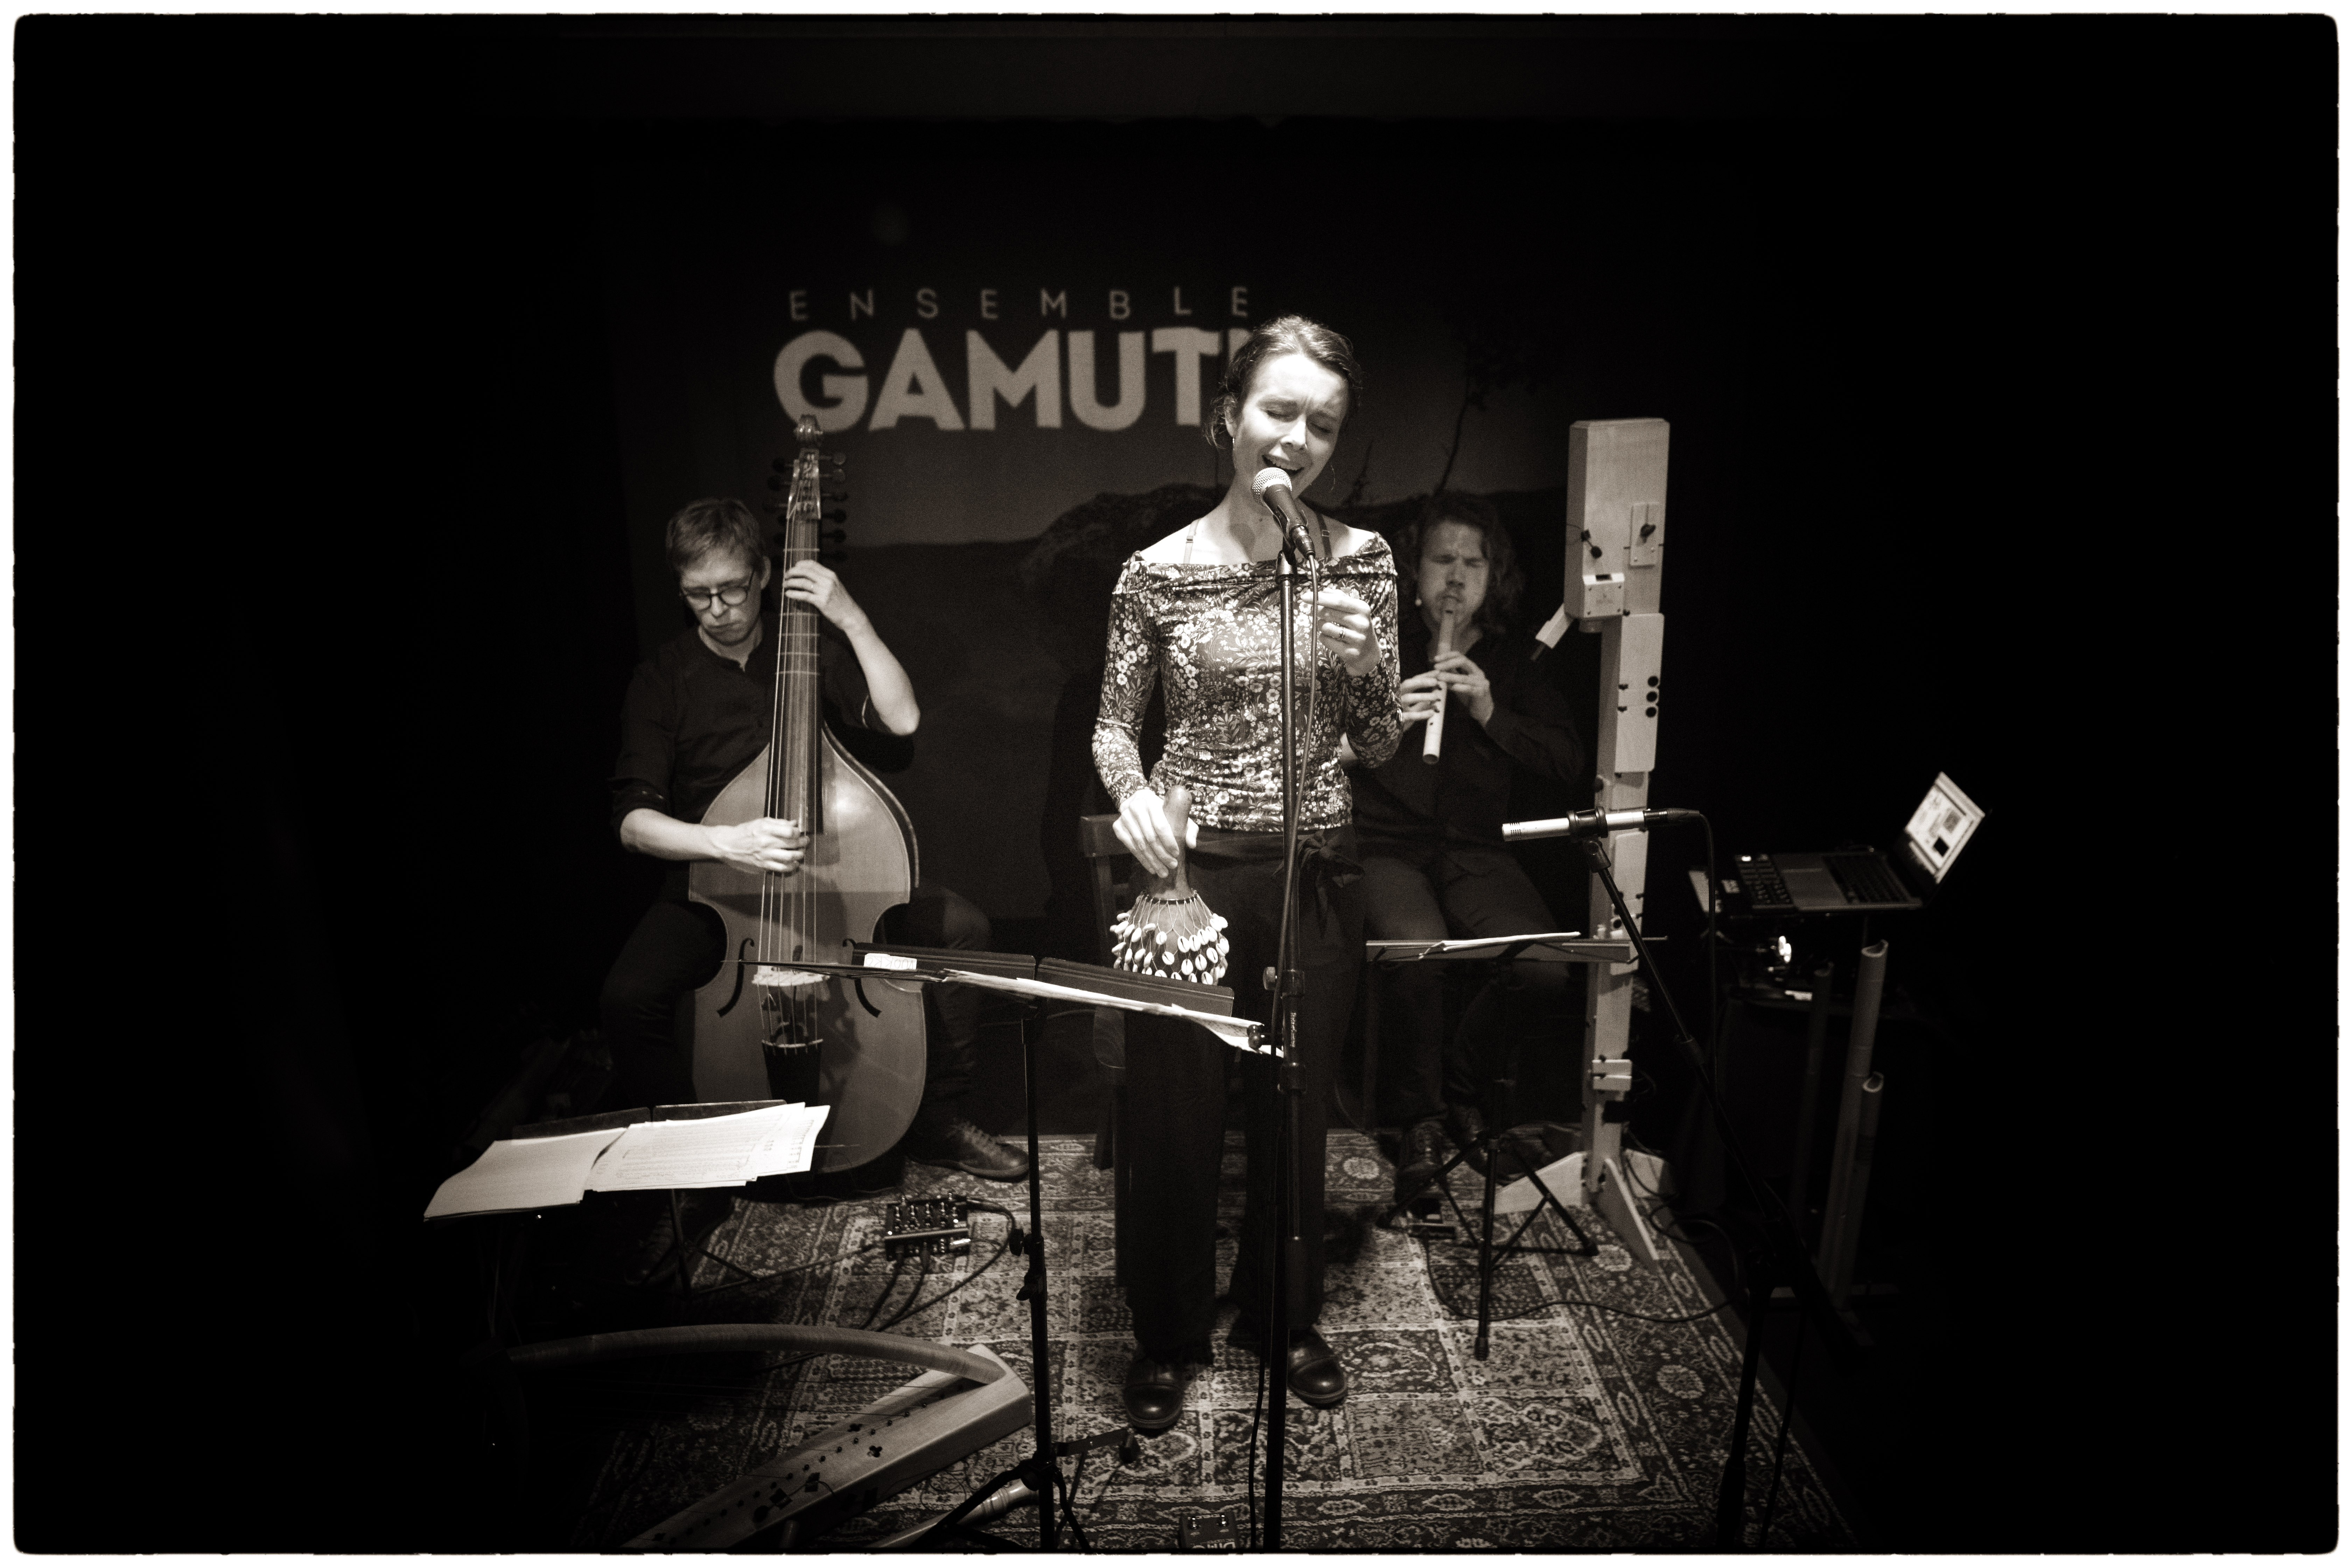 Ensemble Gamut! by Jari Flinck